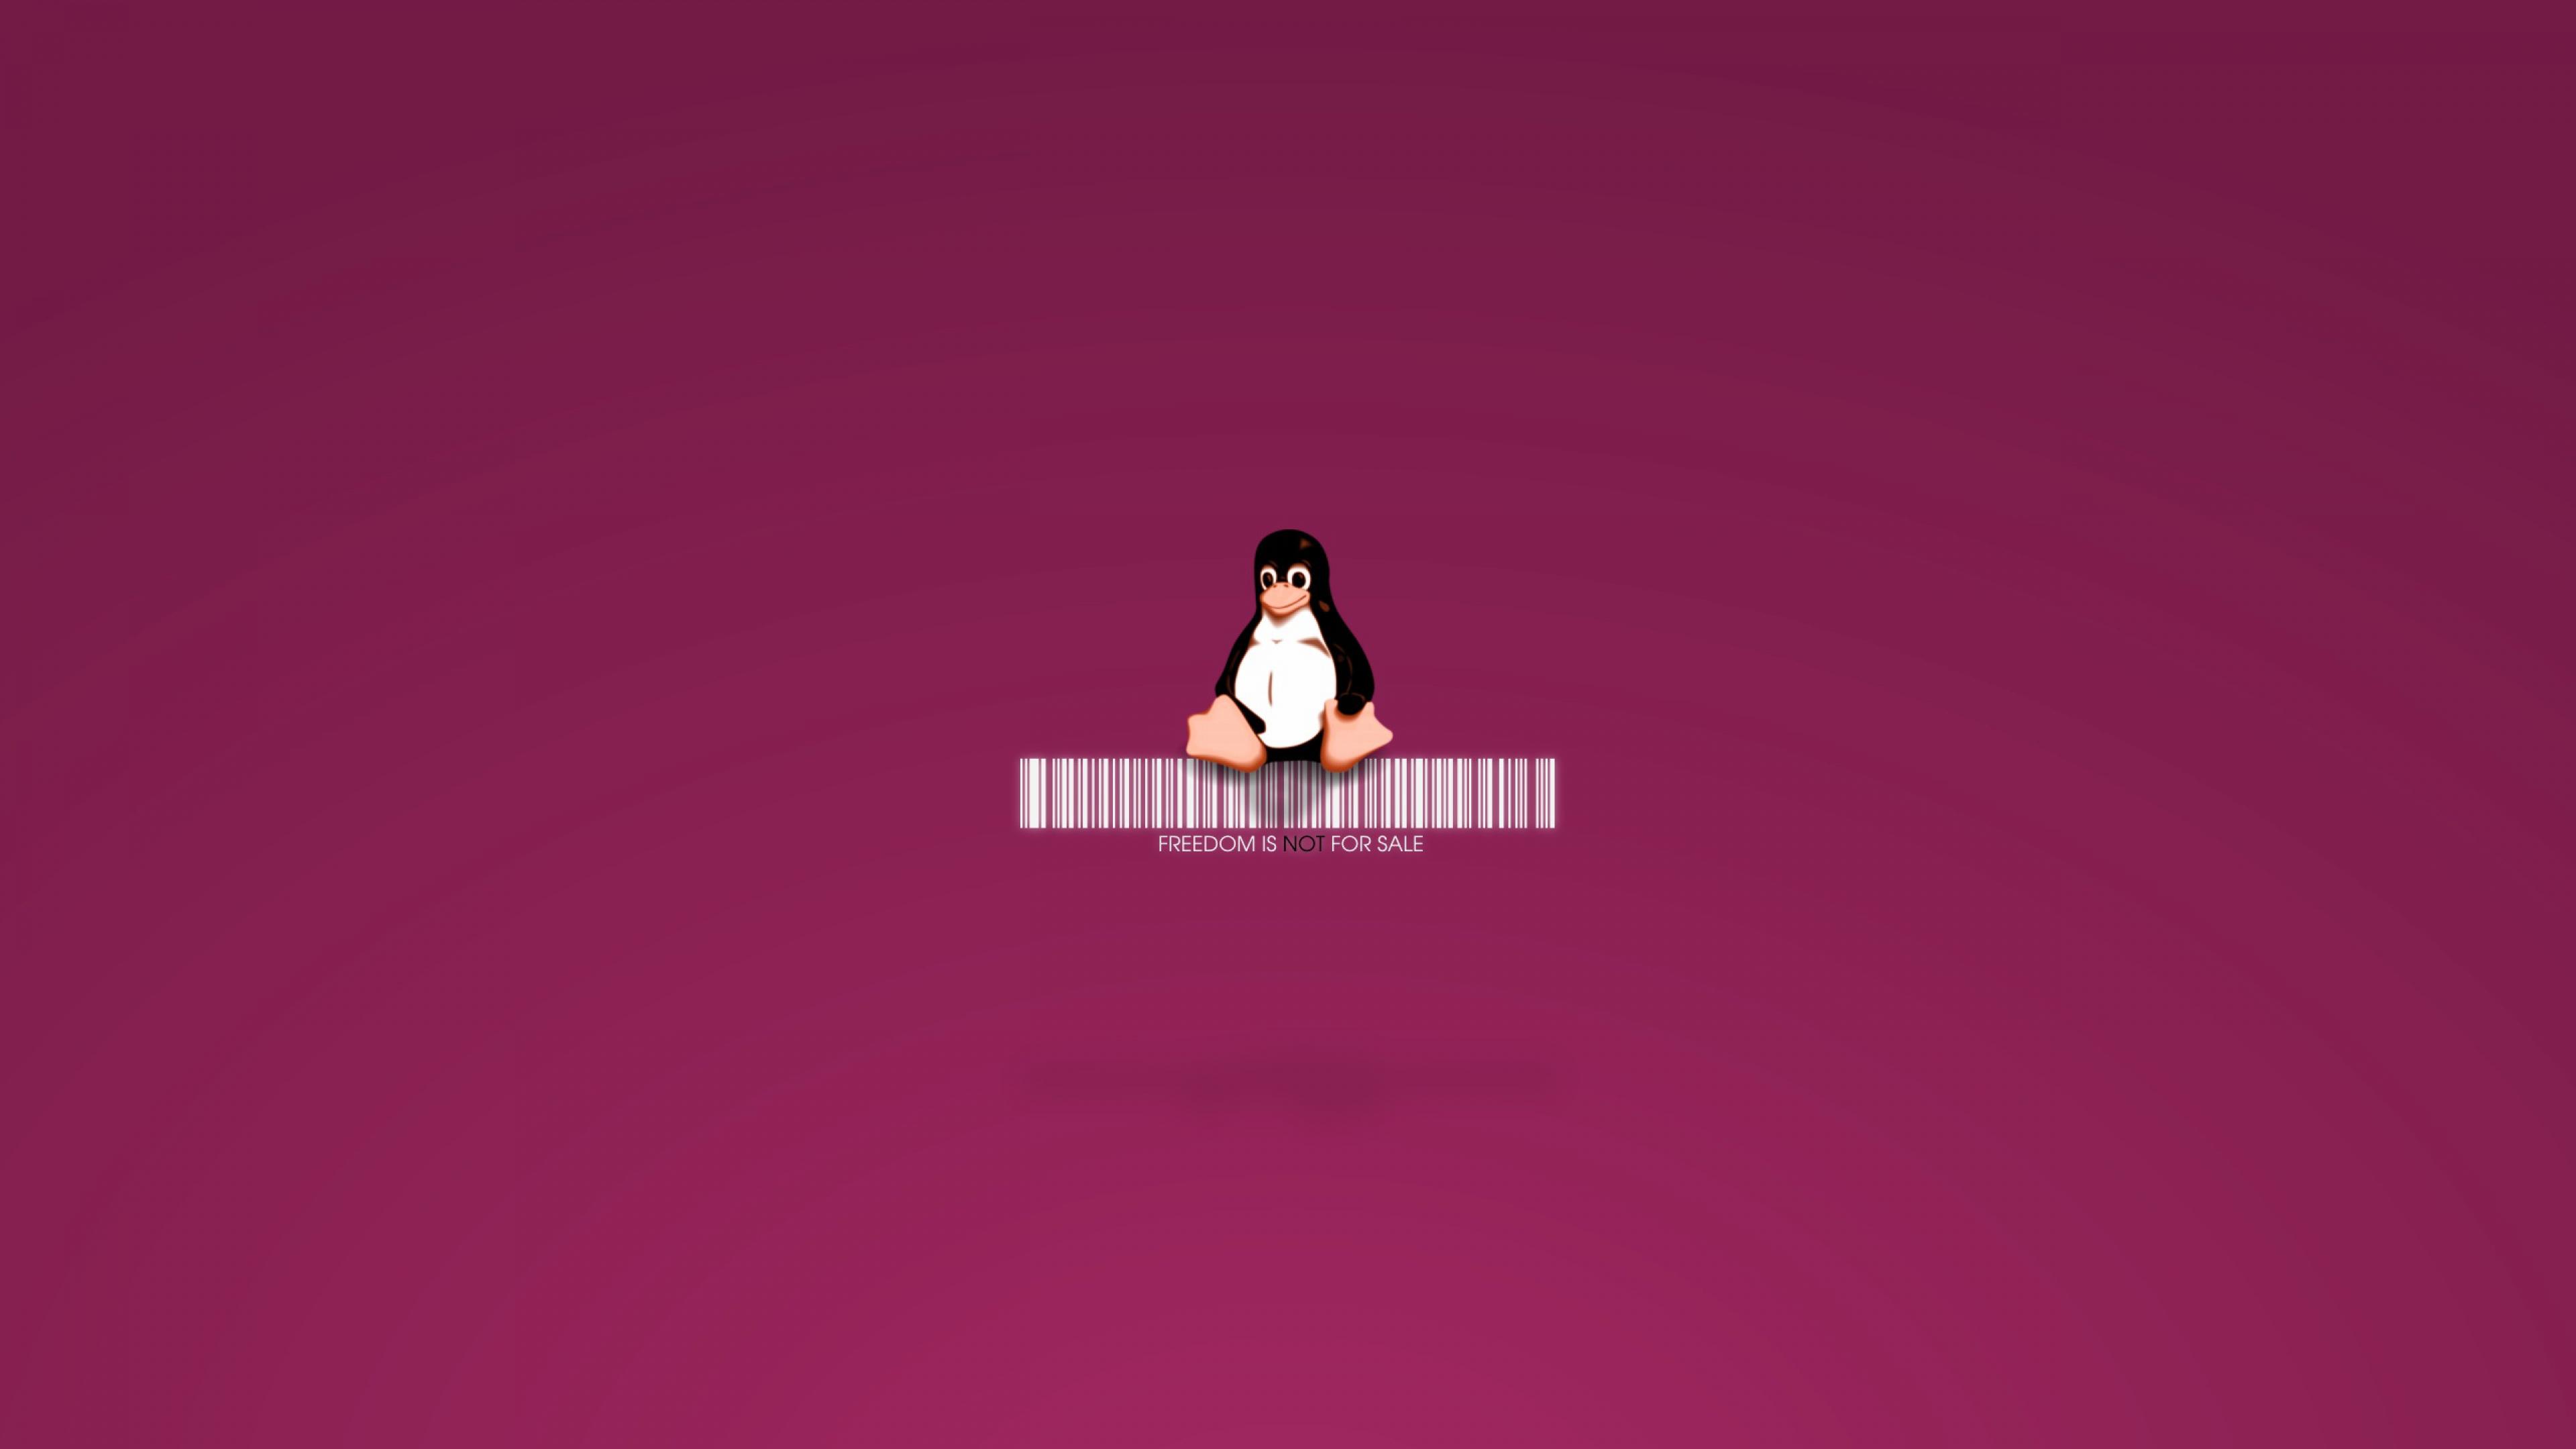 Linux Penguin, HD Computer, 4k Wallpaper, Image